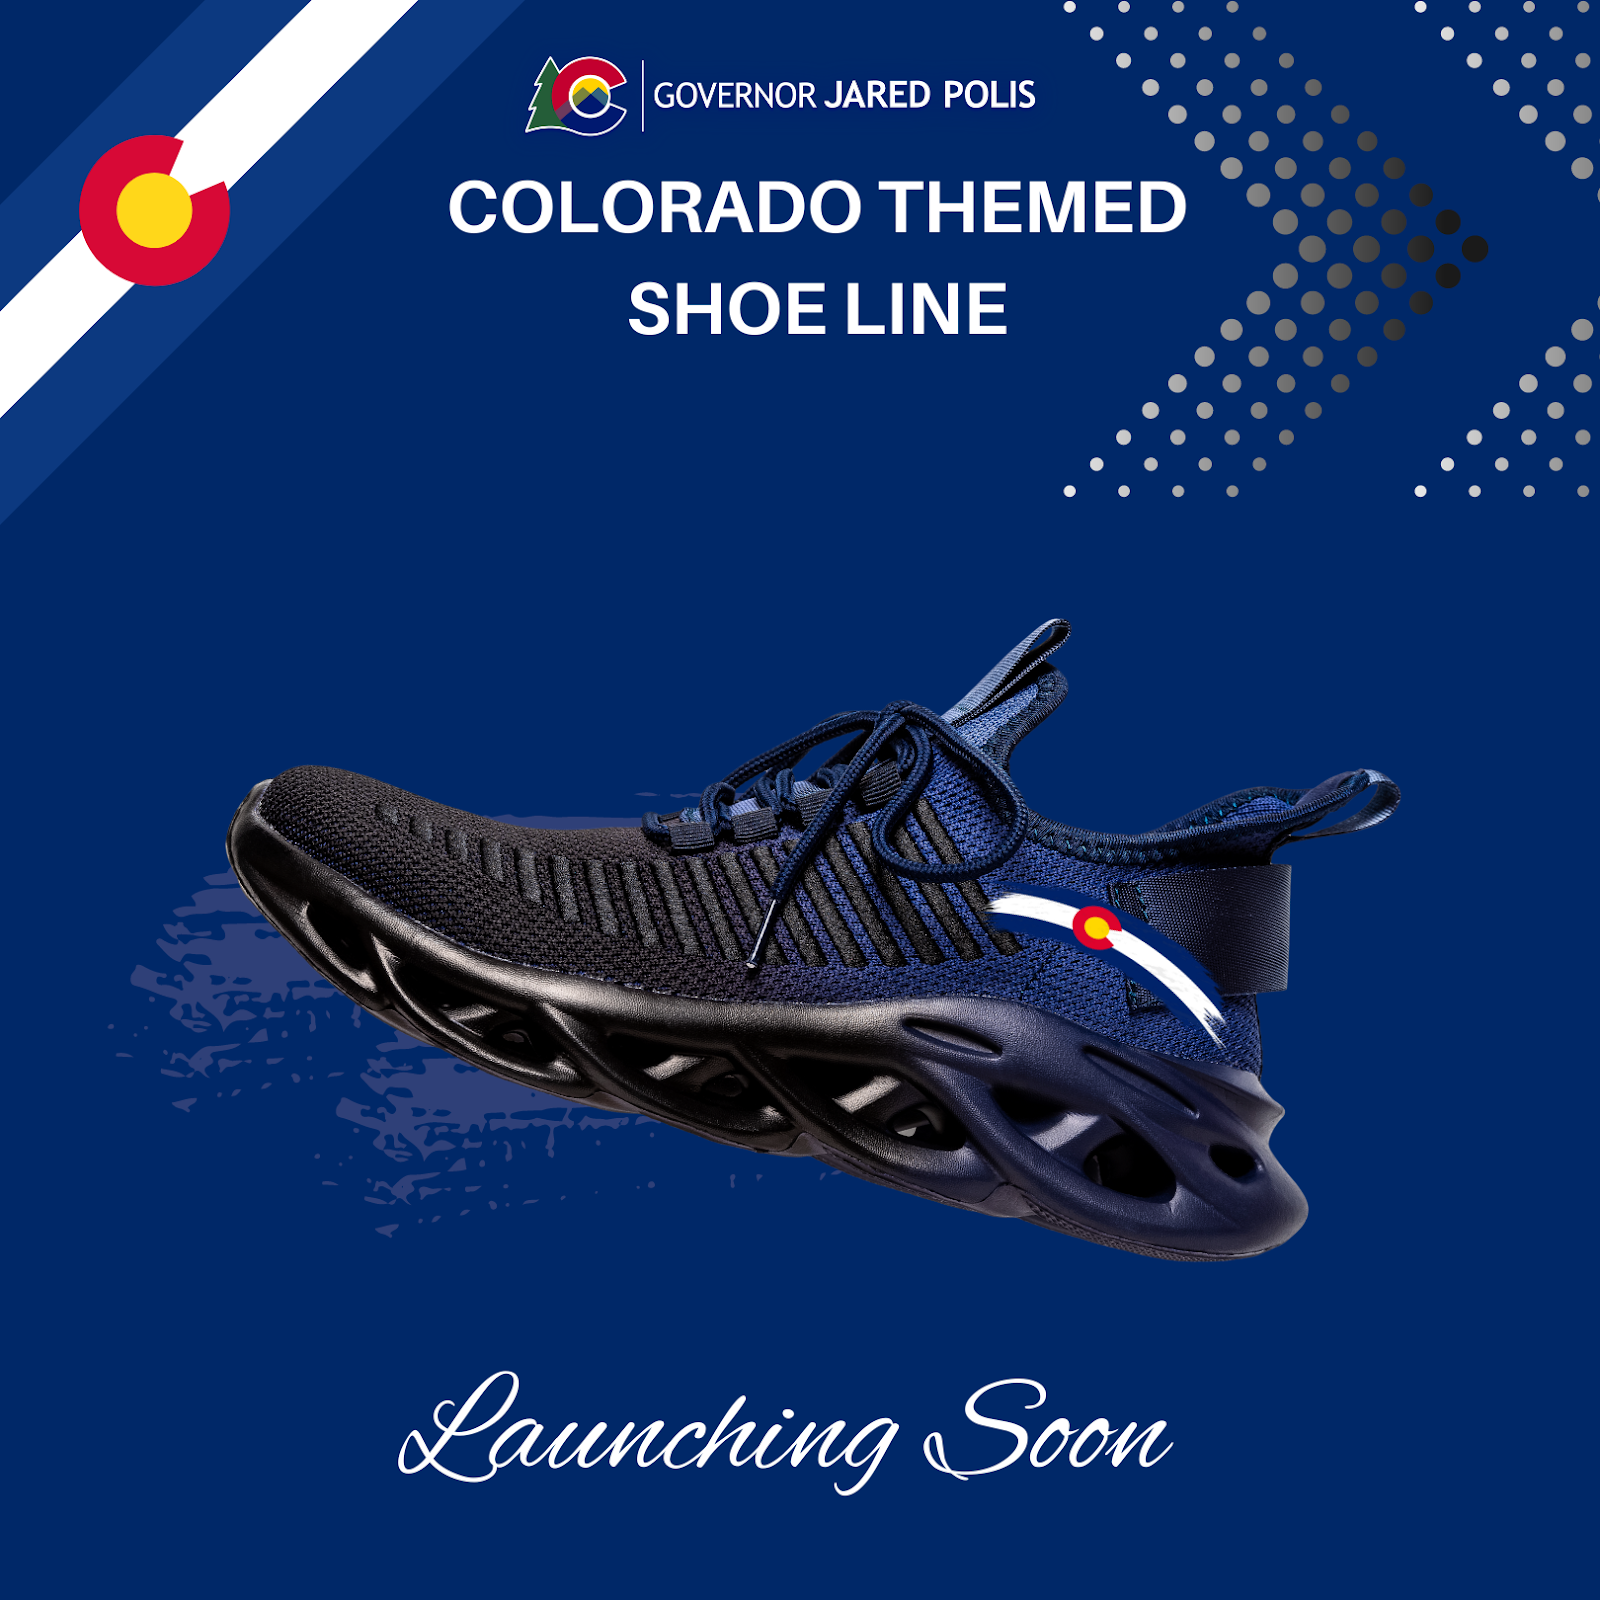 Colorado-themed shoe line. Black and blue running shoe with Colorado logo